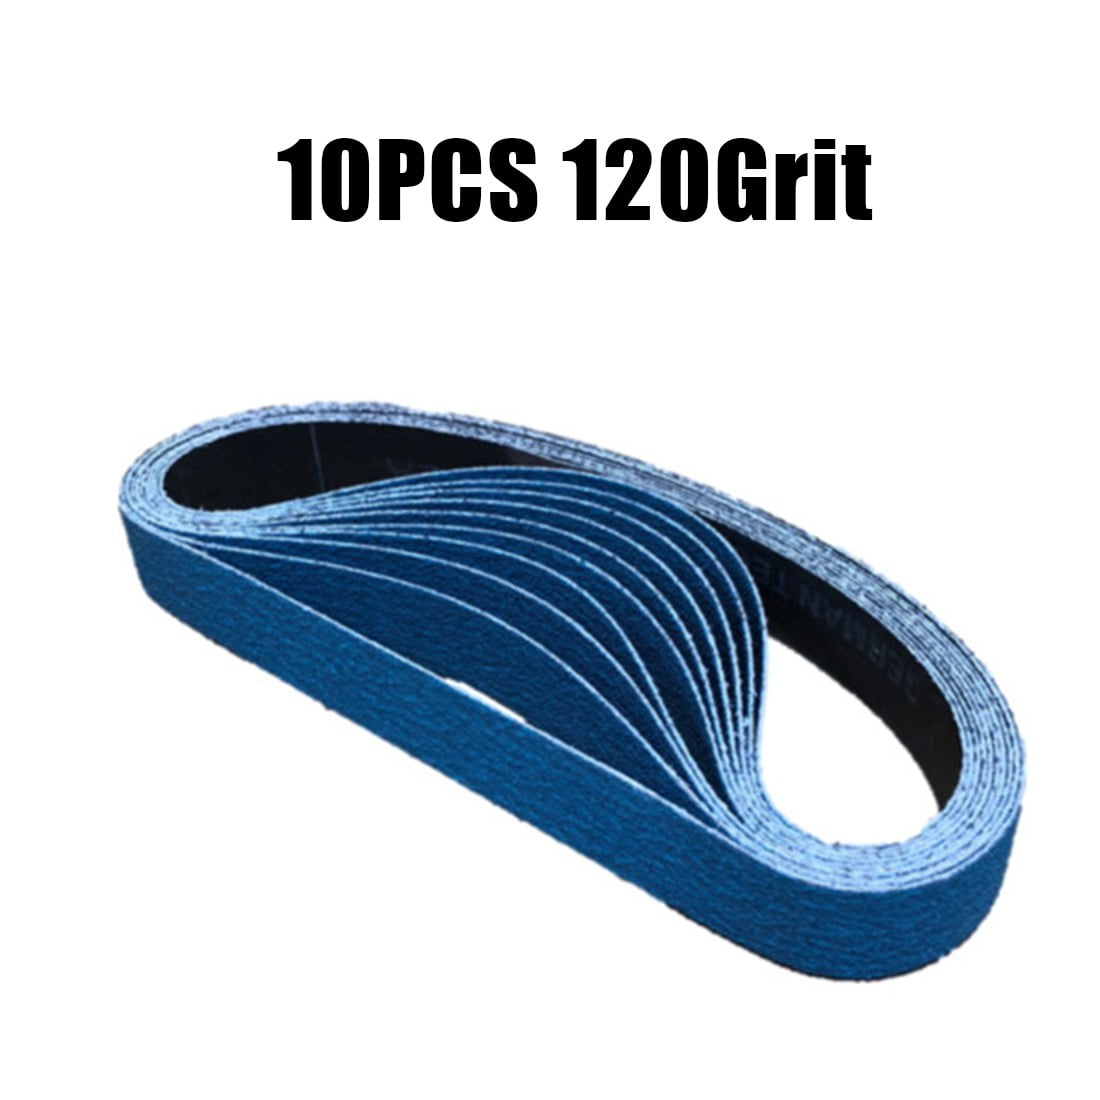 10PCS Sander File Sanding Belts 40/60/80/120 Grit 20mm X 520mm Quality 